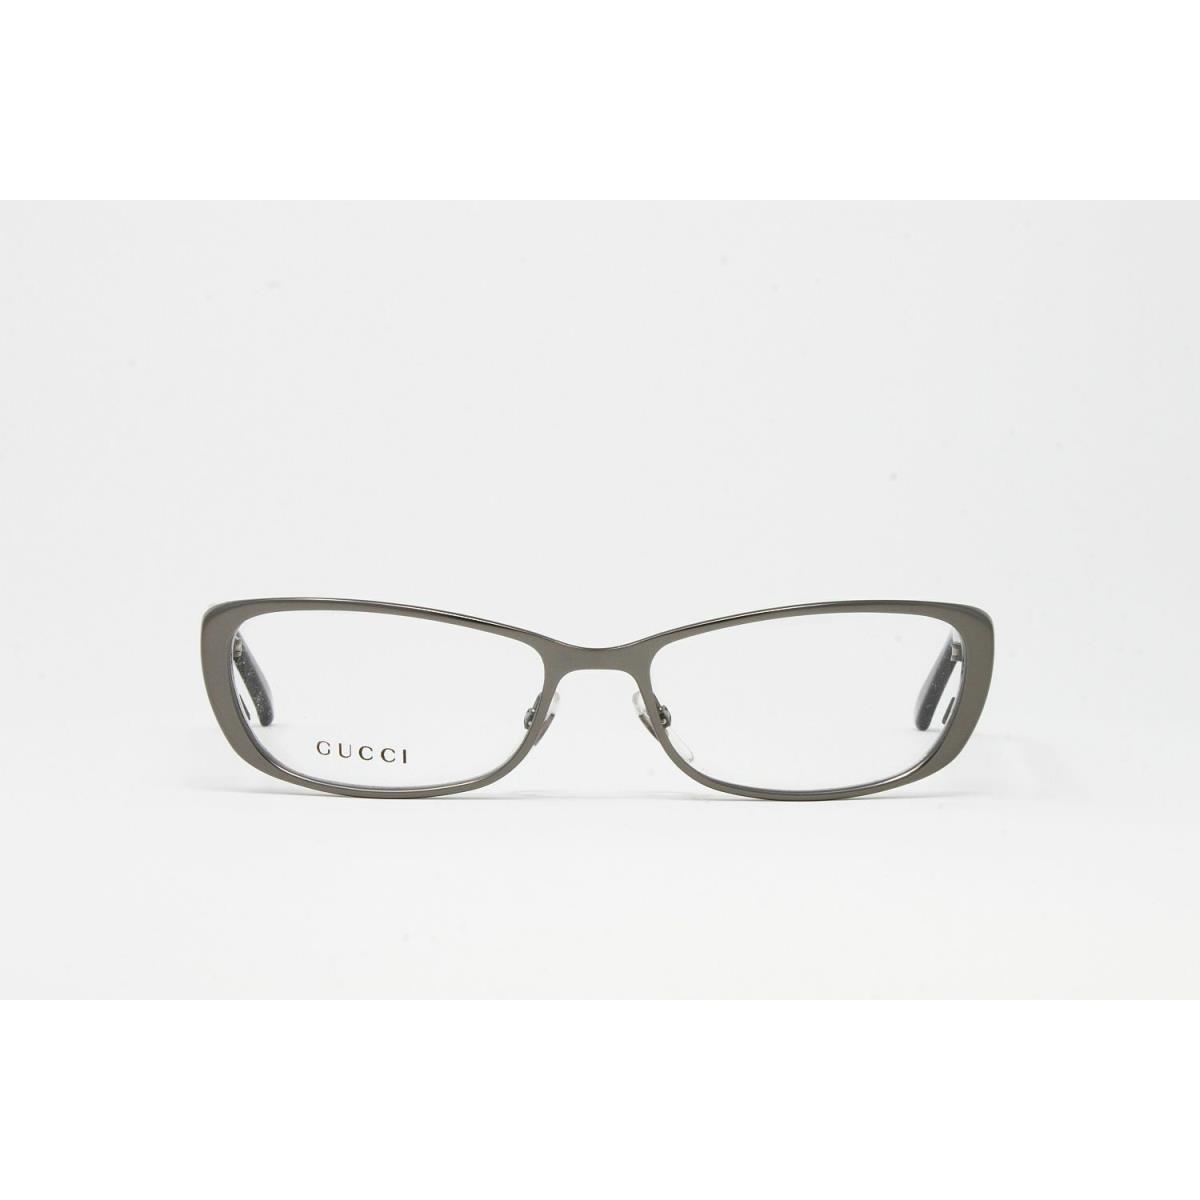 Gucci eyeglasses  - Gray Frame 3